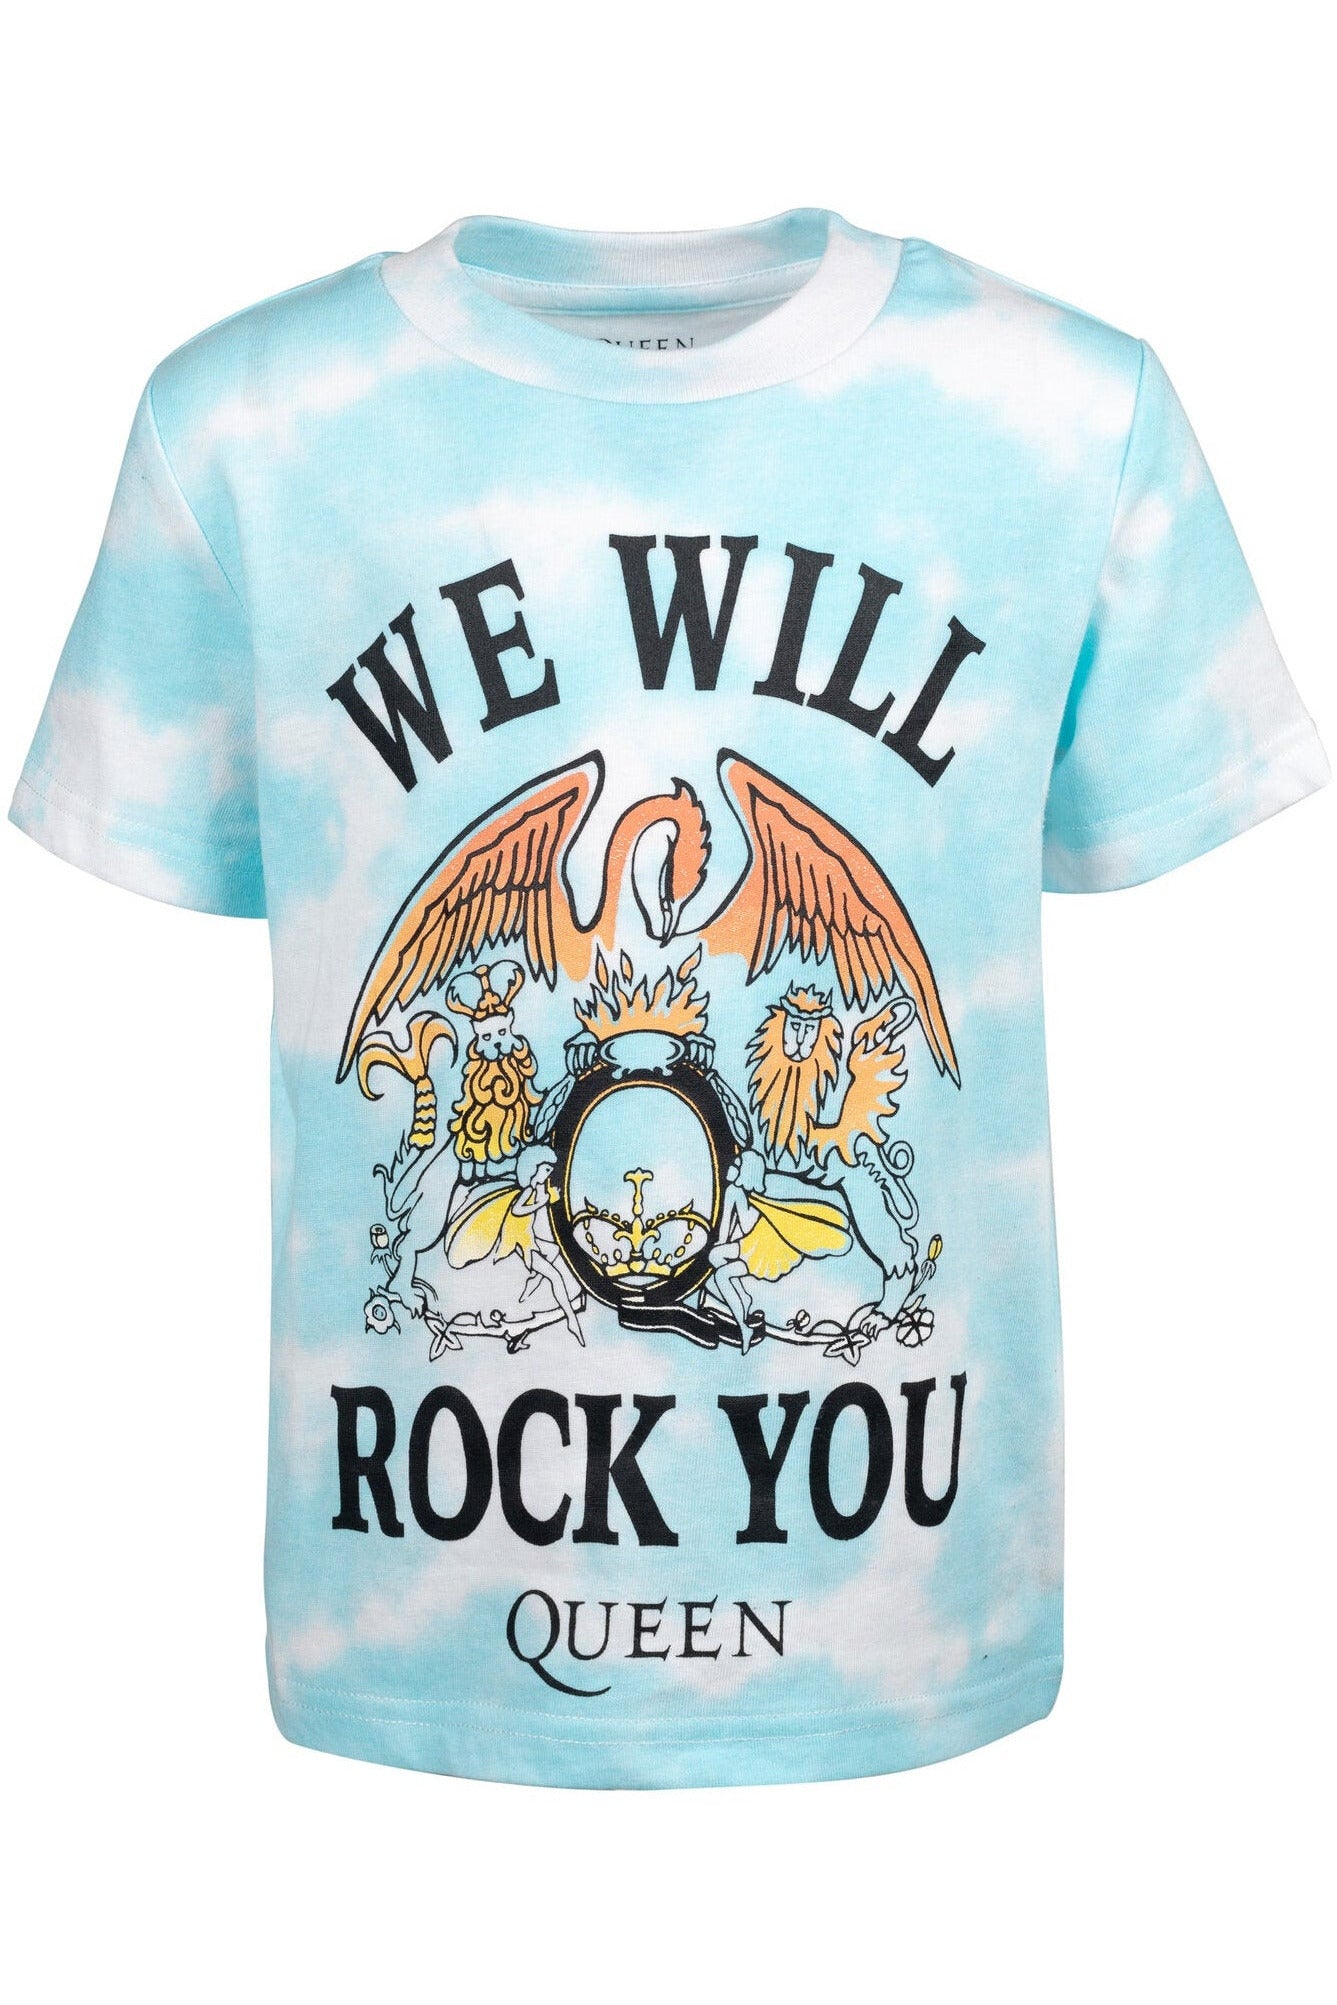 Queen 3 Pack Raglan Camisetas gráficas